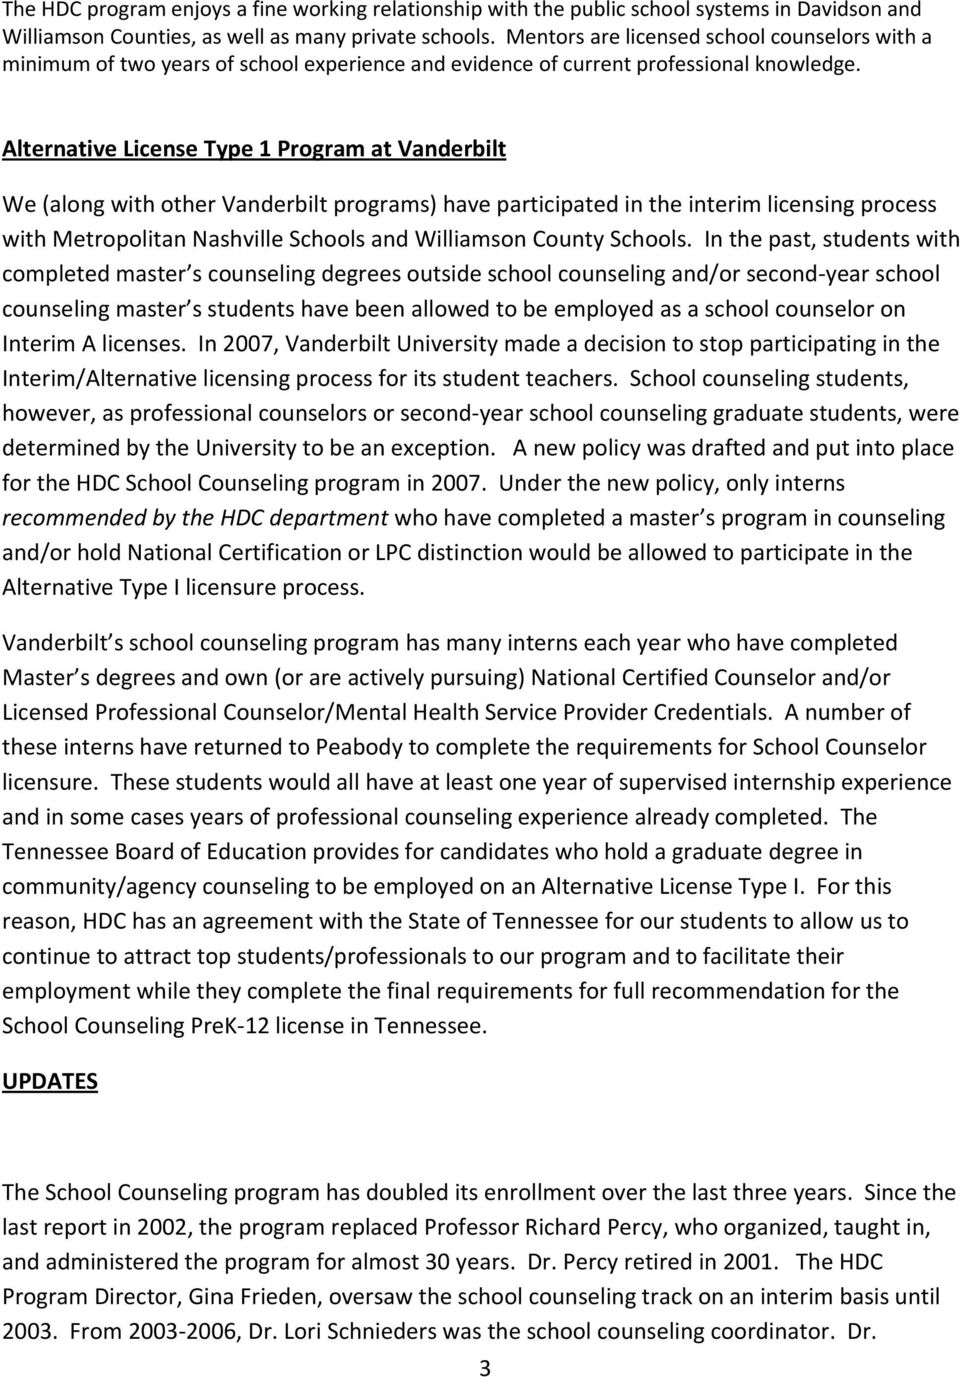 Alternative License Type 1 Program at Vanderbilt We (along with other Vanderbilt programs) have participated in the interim licensing process with Metropolitan Nashville Schools and Williamson County